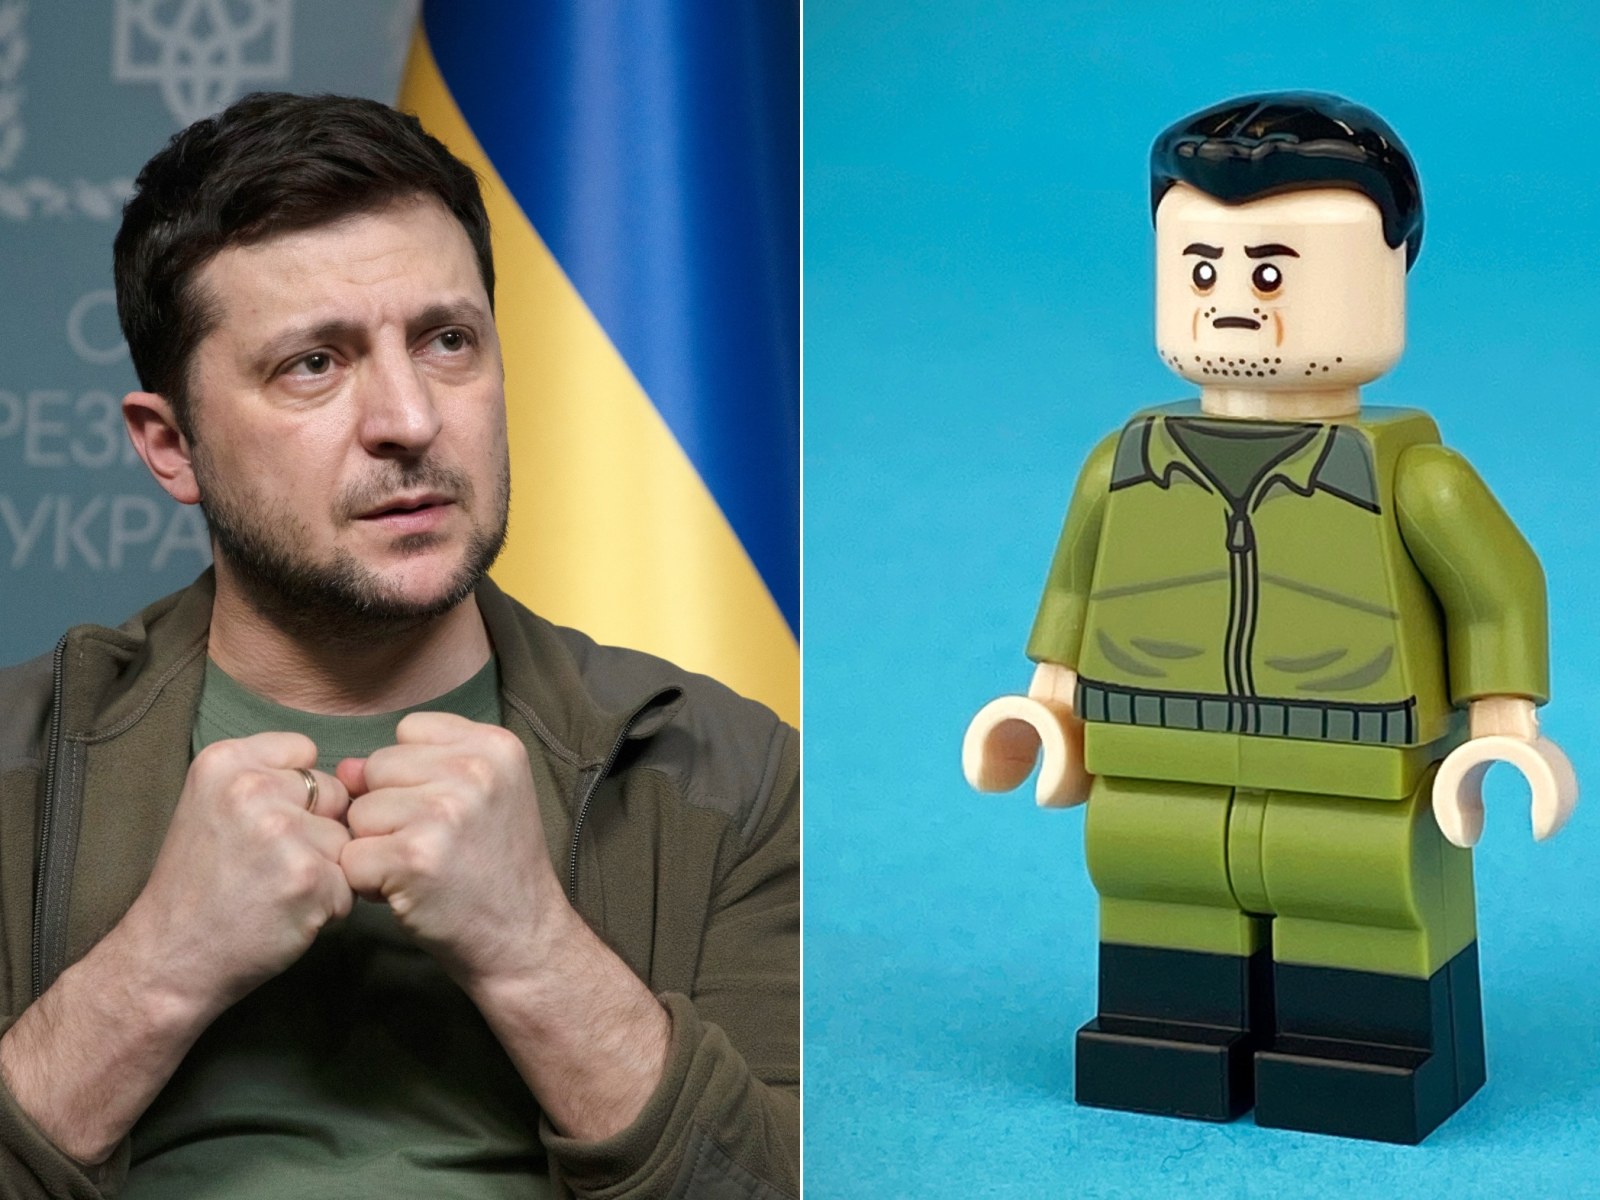 Zelensky Lego Figures Released To Raise Money for Ukraine Refugees